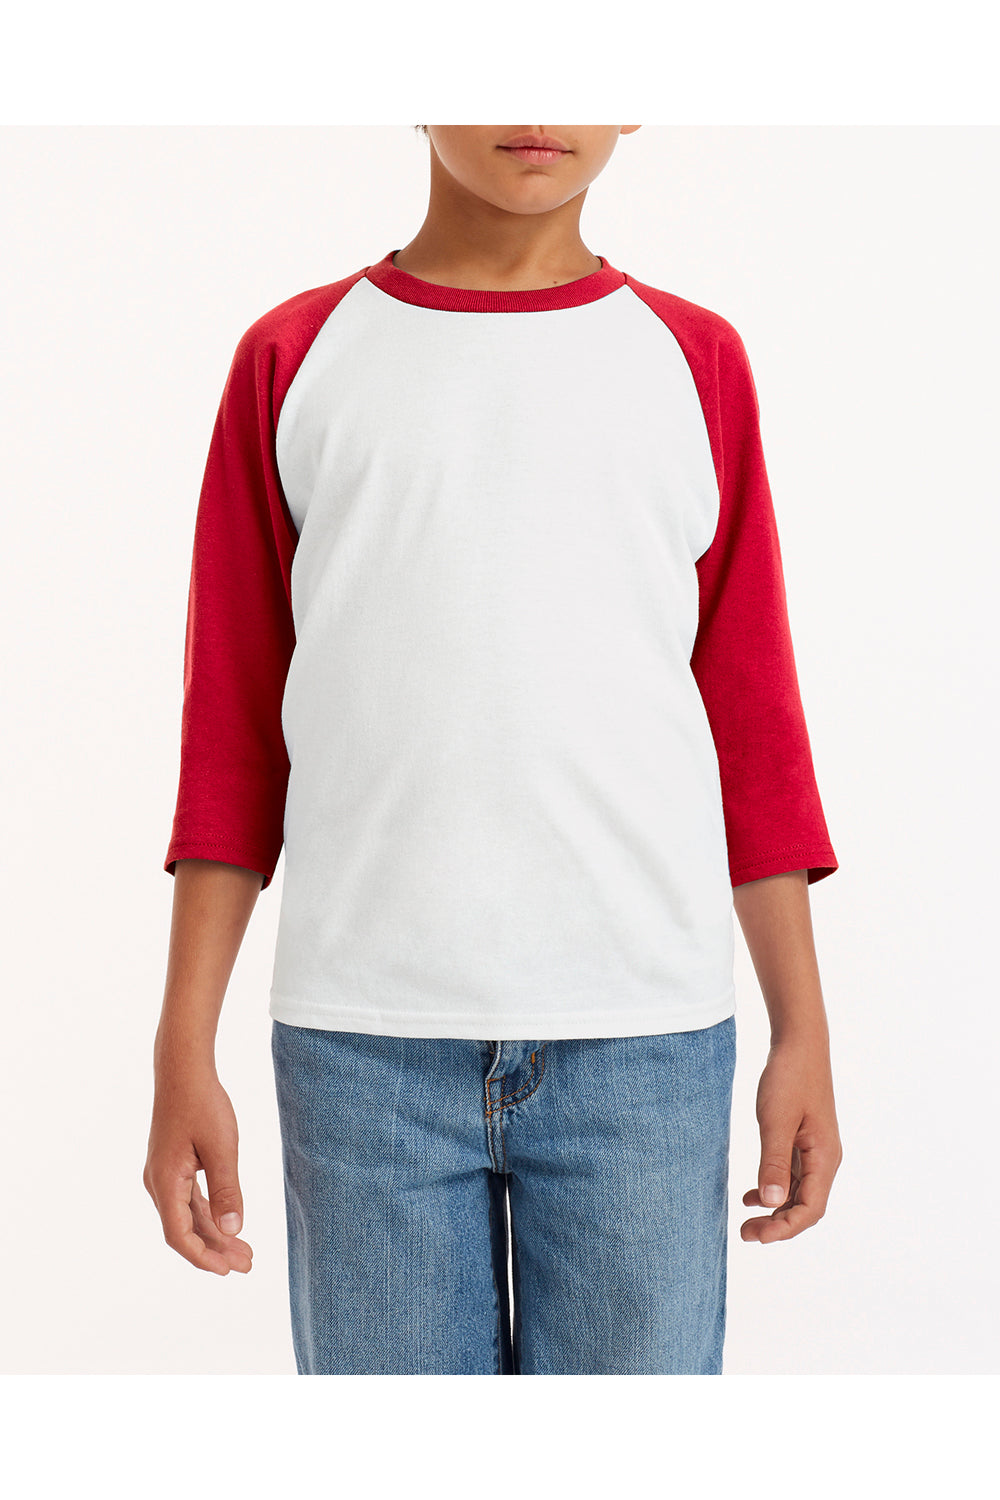 Gildan G570B Youth 3/4 Sleeve Crewneck T-Shirt White/Red Front